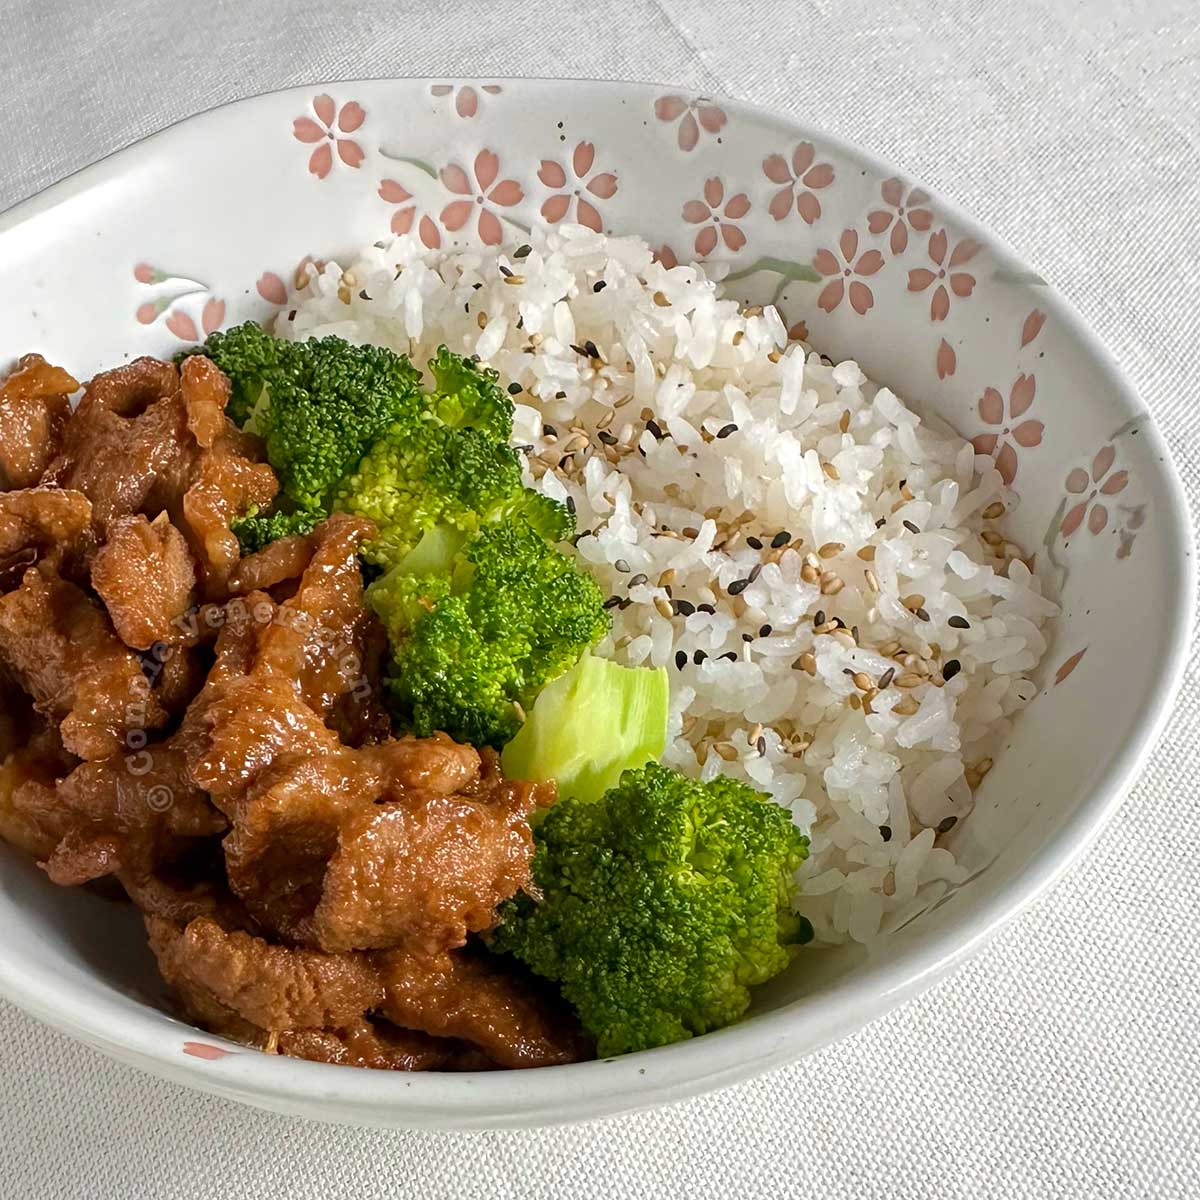 Pork bulgogi in bowl with rice and broccoli florets